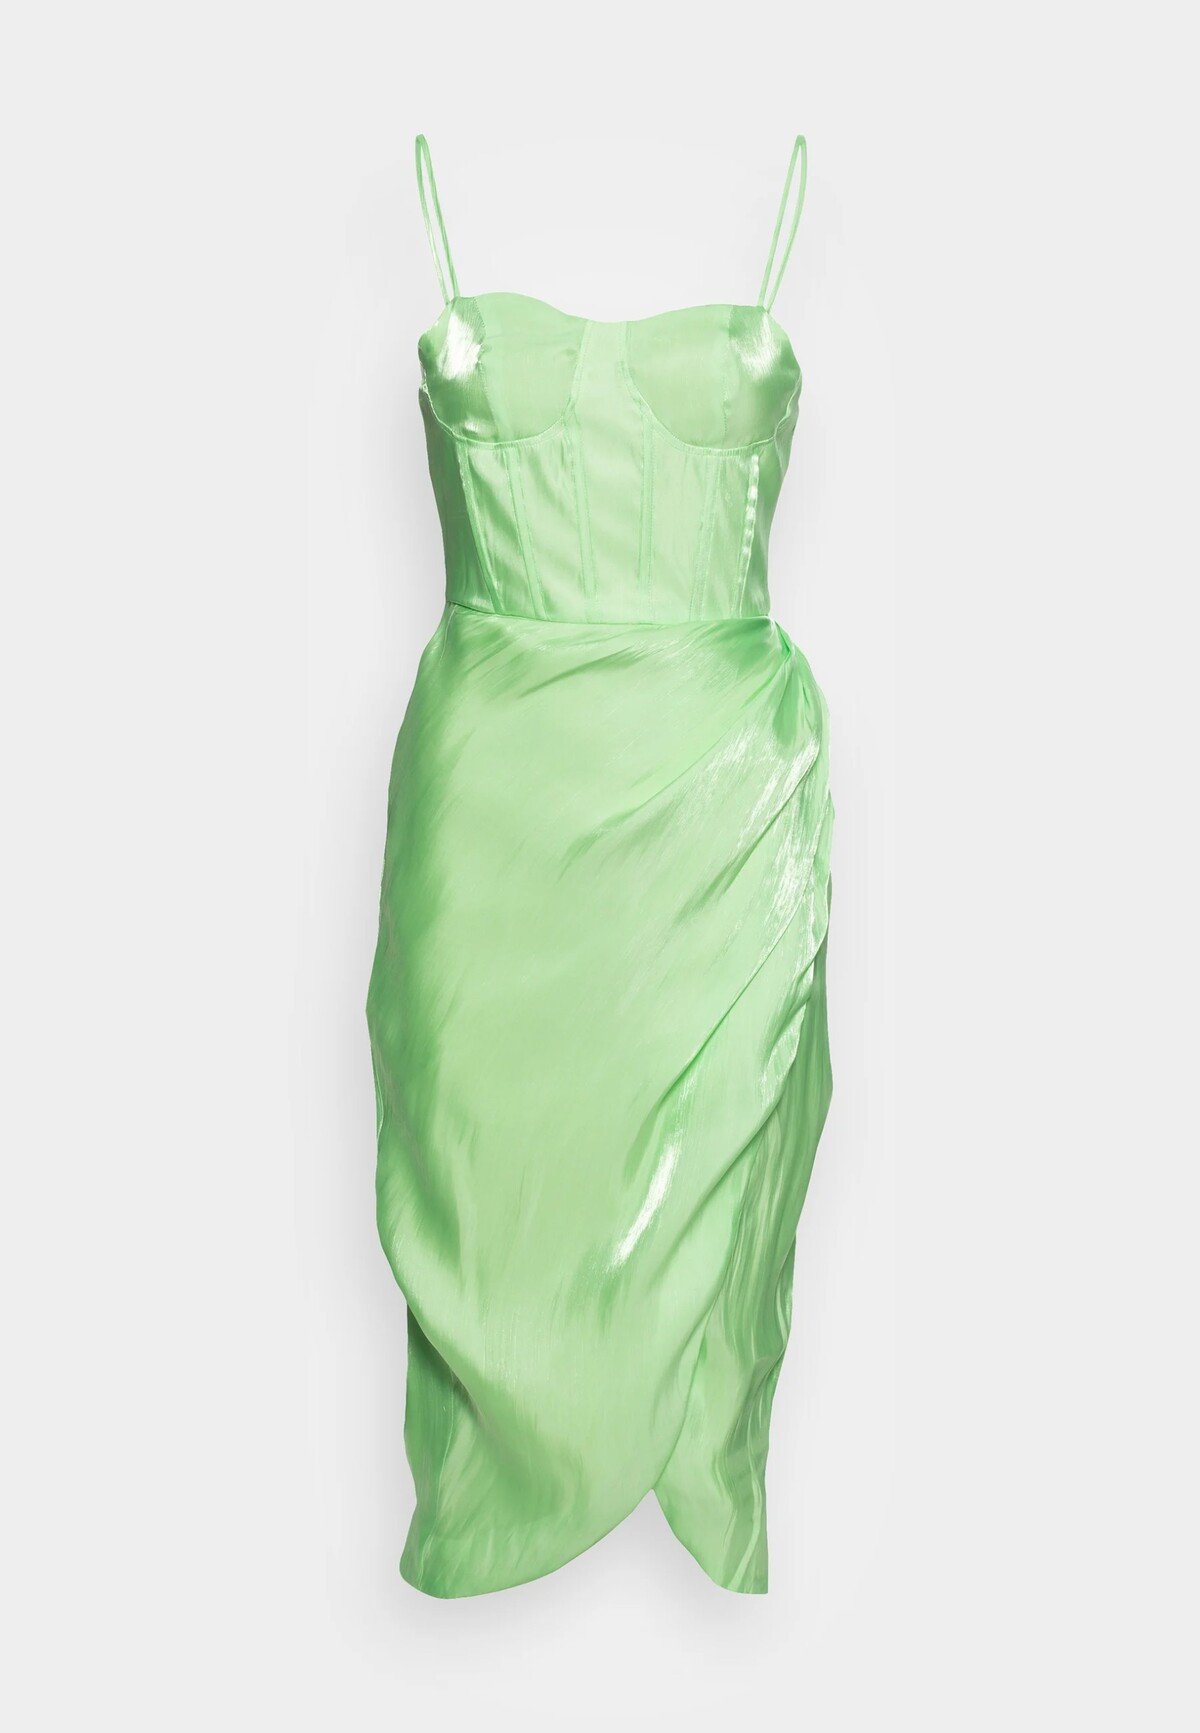 Bledozelené koktailové šaty CORSET STRAPPY WRAP MIDI DRESS ti značka Glamorous ponúka za 59,49 eur.